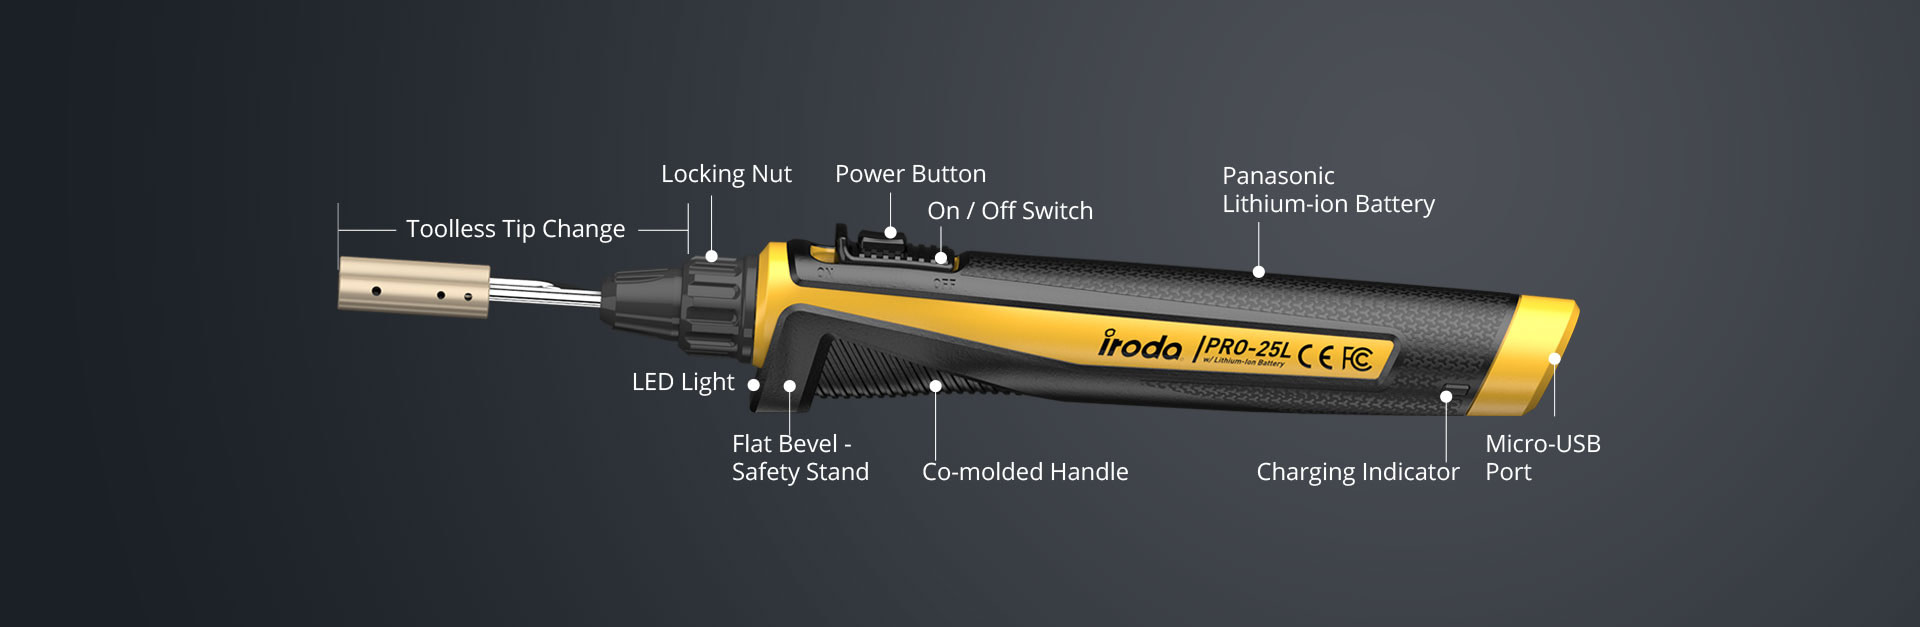 Horizontal Description of PRO-25LP USB Rechargeable Plastic Welding Iron from Pro-Iroda